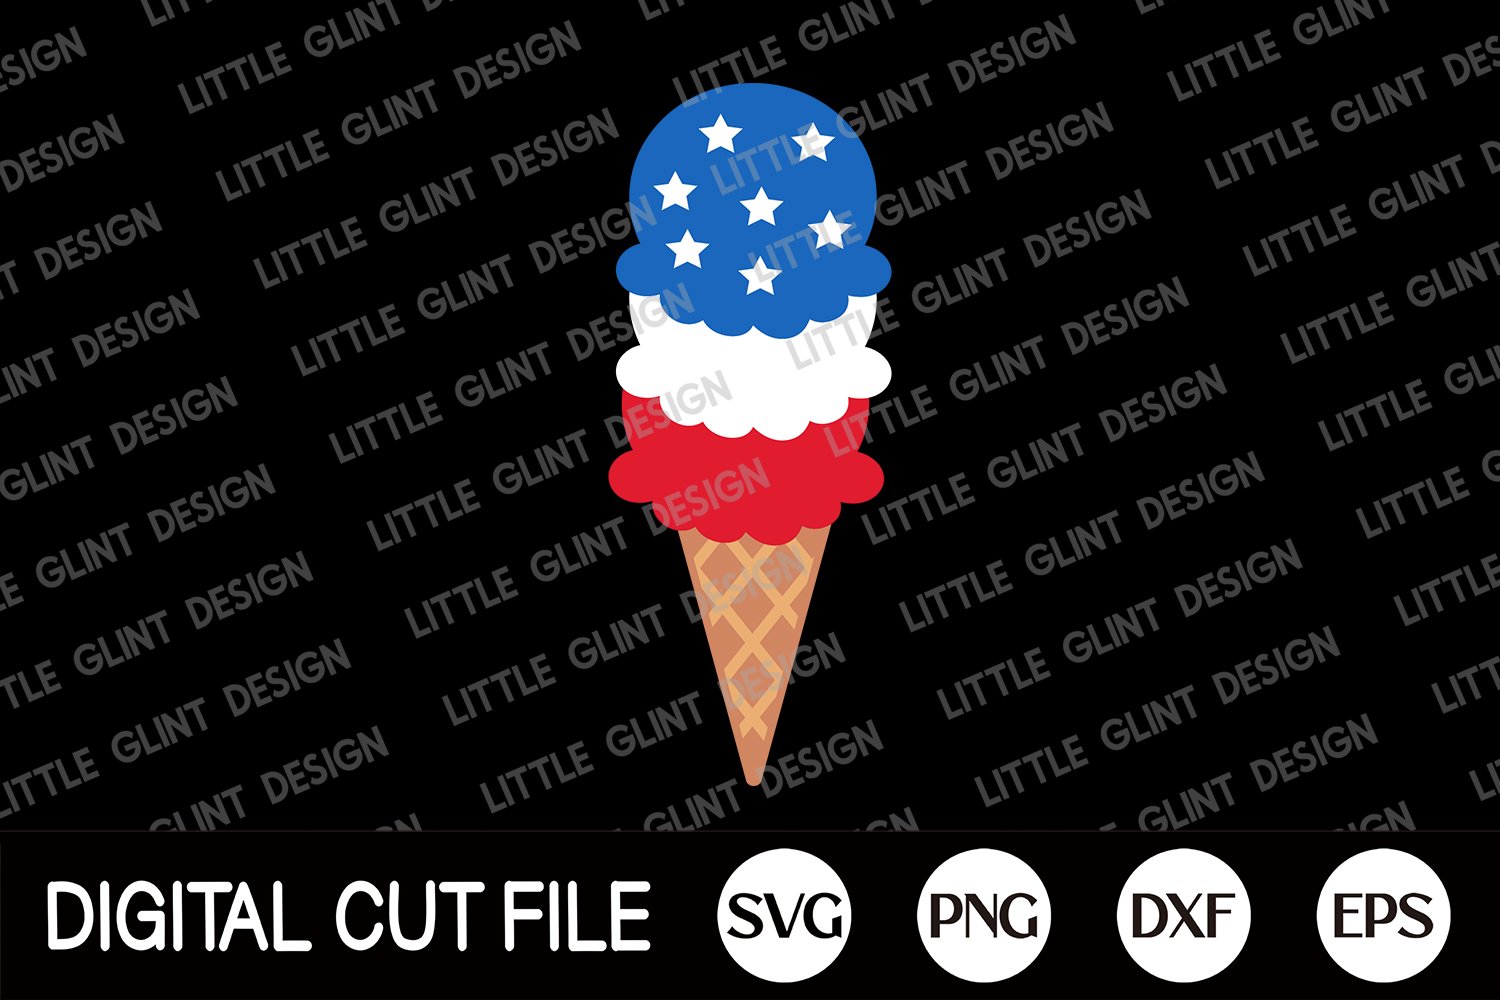 Scoops of ice cream on a cone with patriotic symbols.